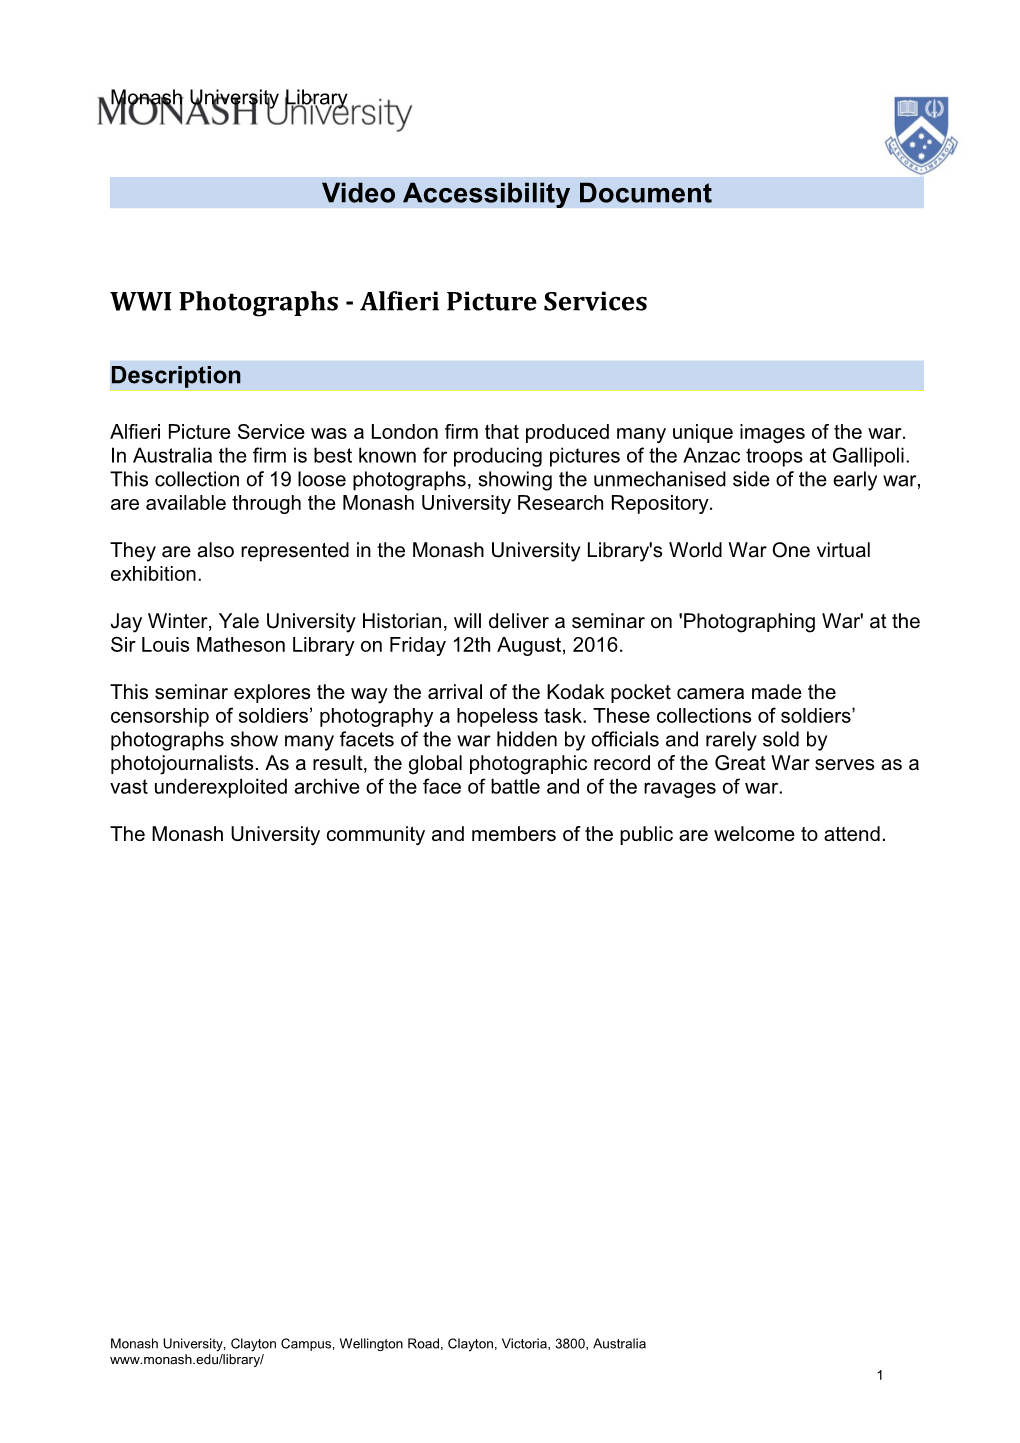 WWI Photographs - Alfieri Picture Services - Accessibility Document